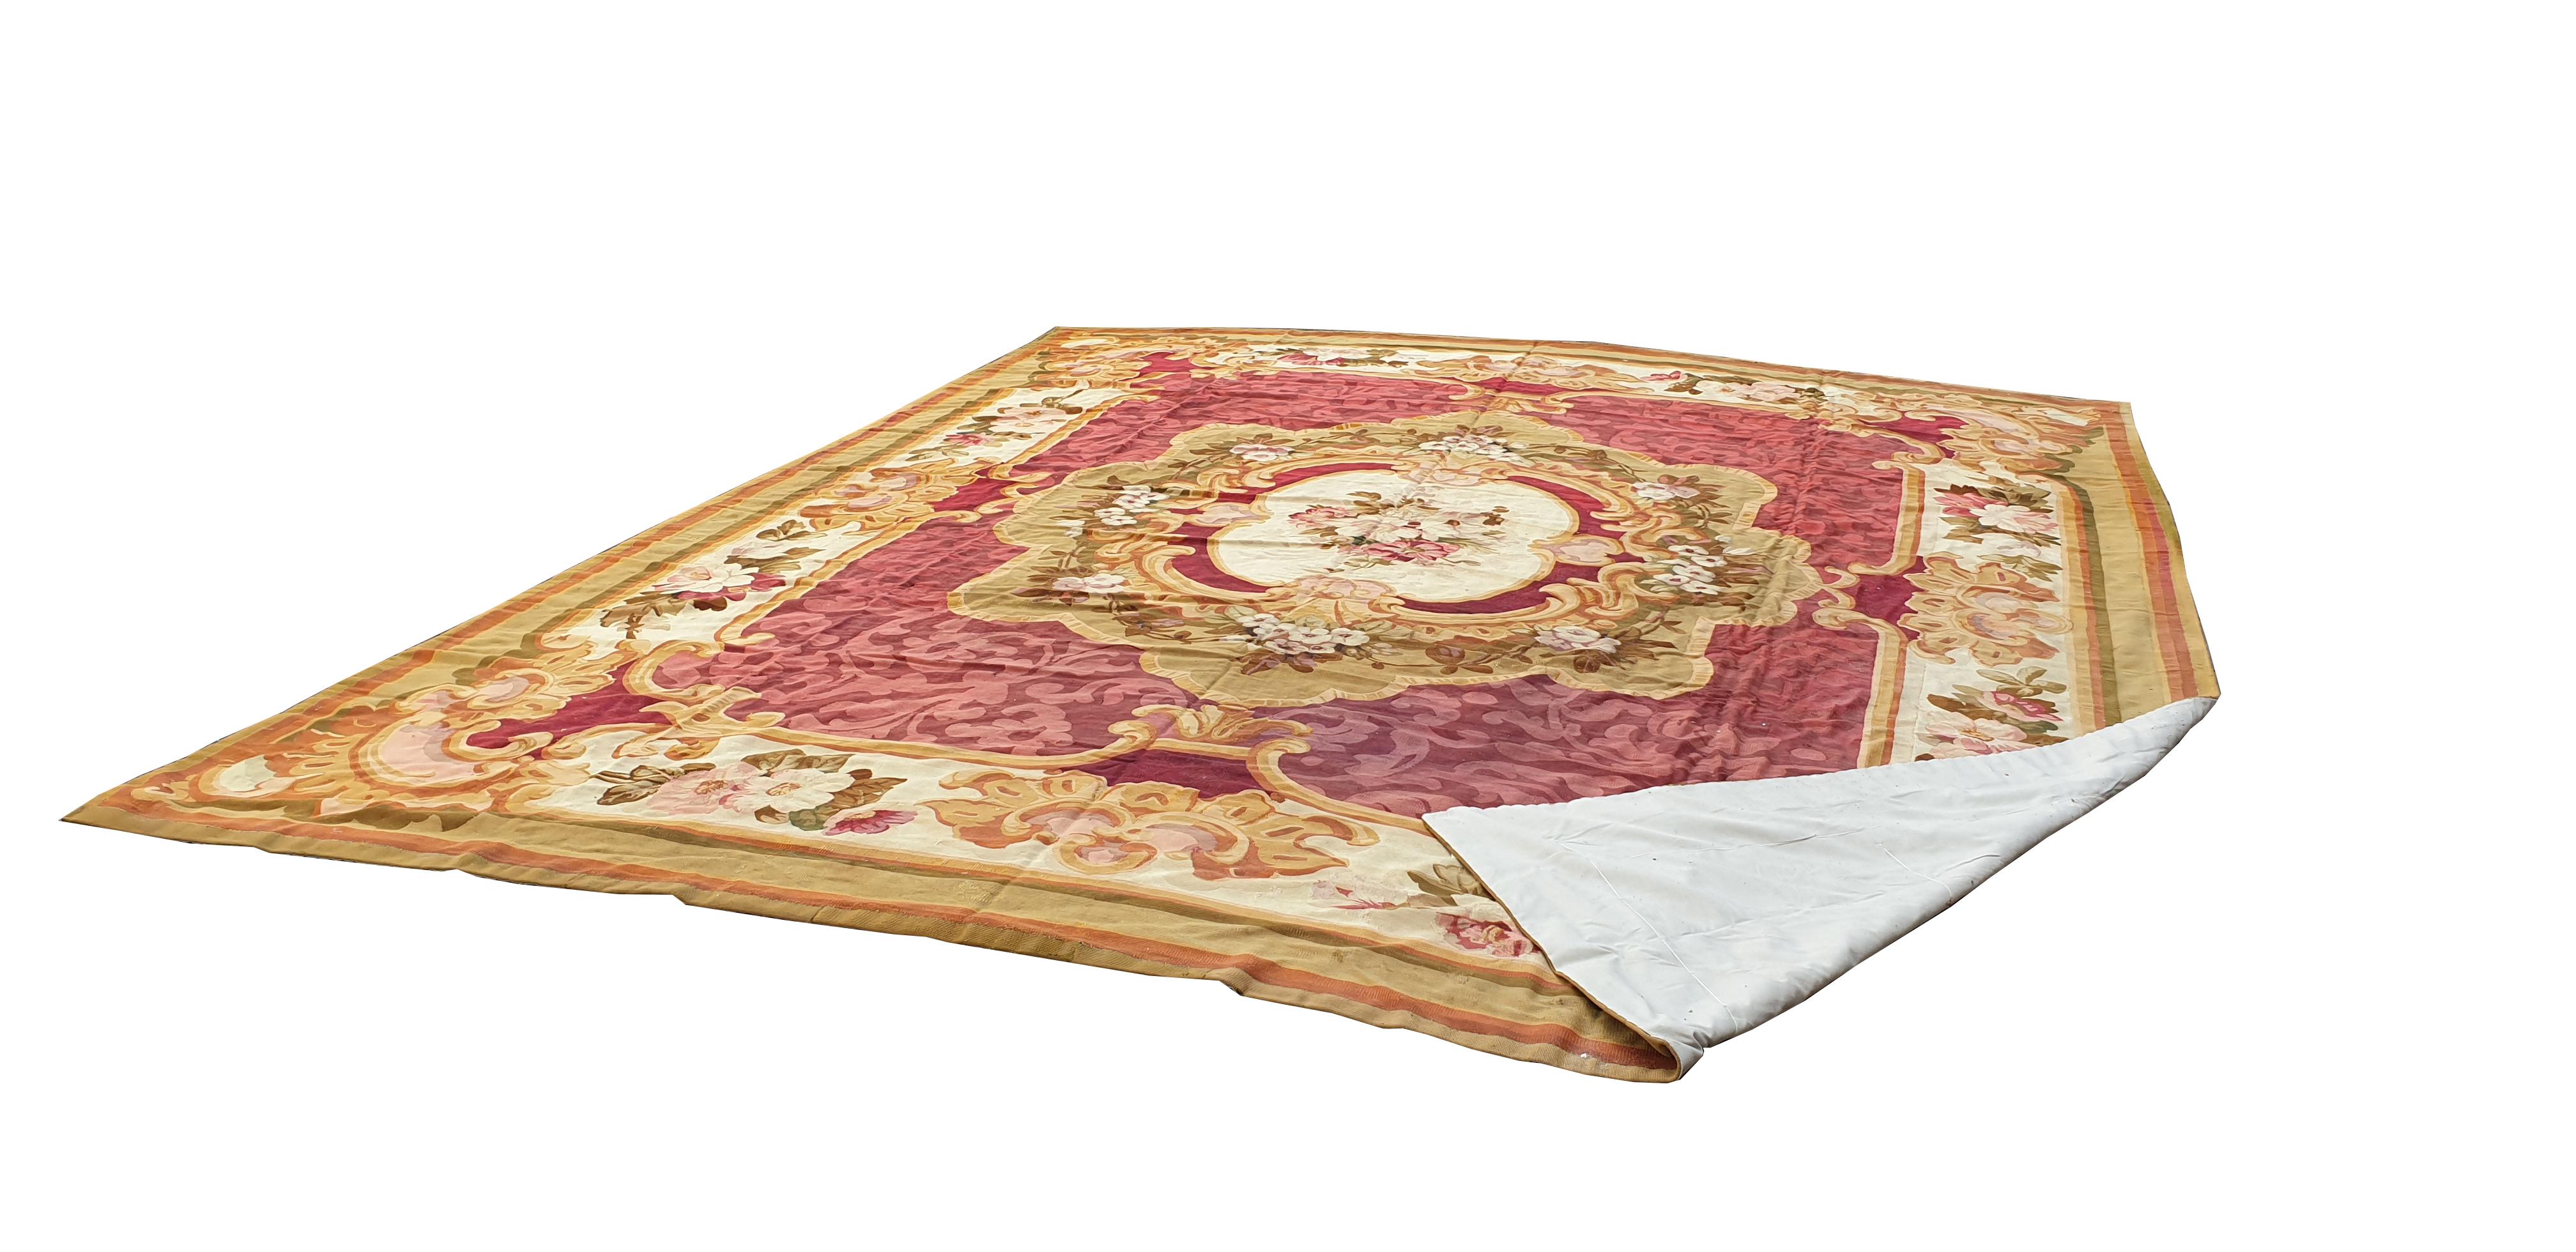 Wool 19th century Aubusson carpet (napoleon 3) - N 910 For Sale